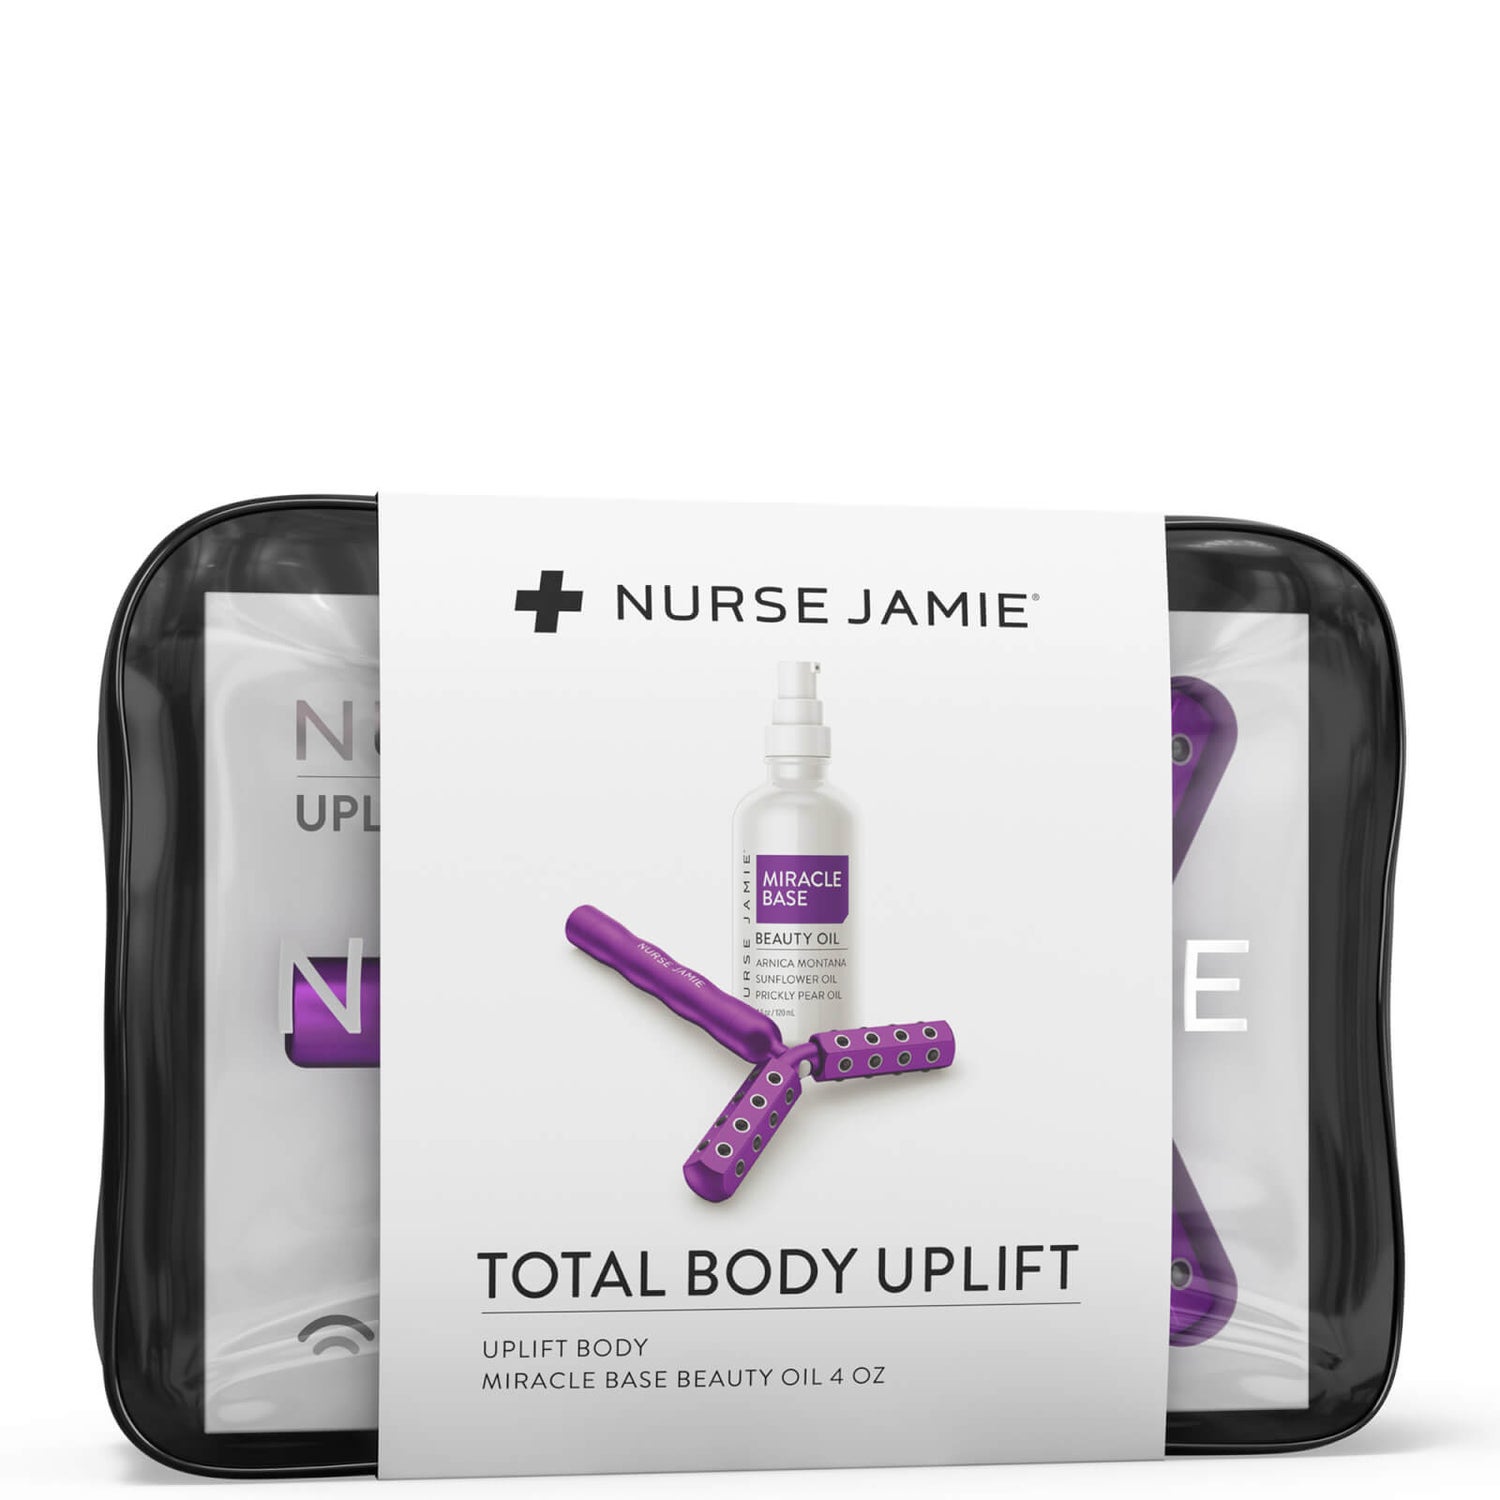 Nurse Jamie Total Body Uplift Kit